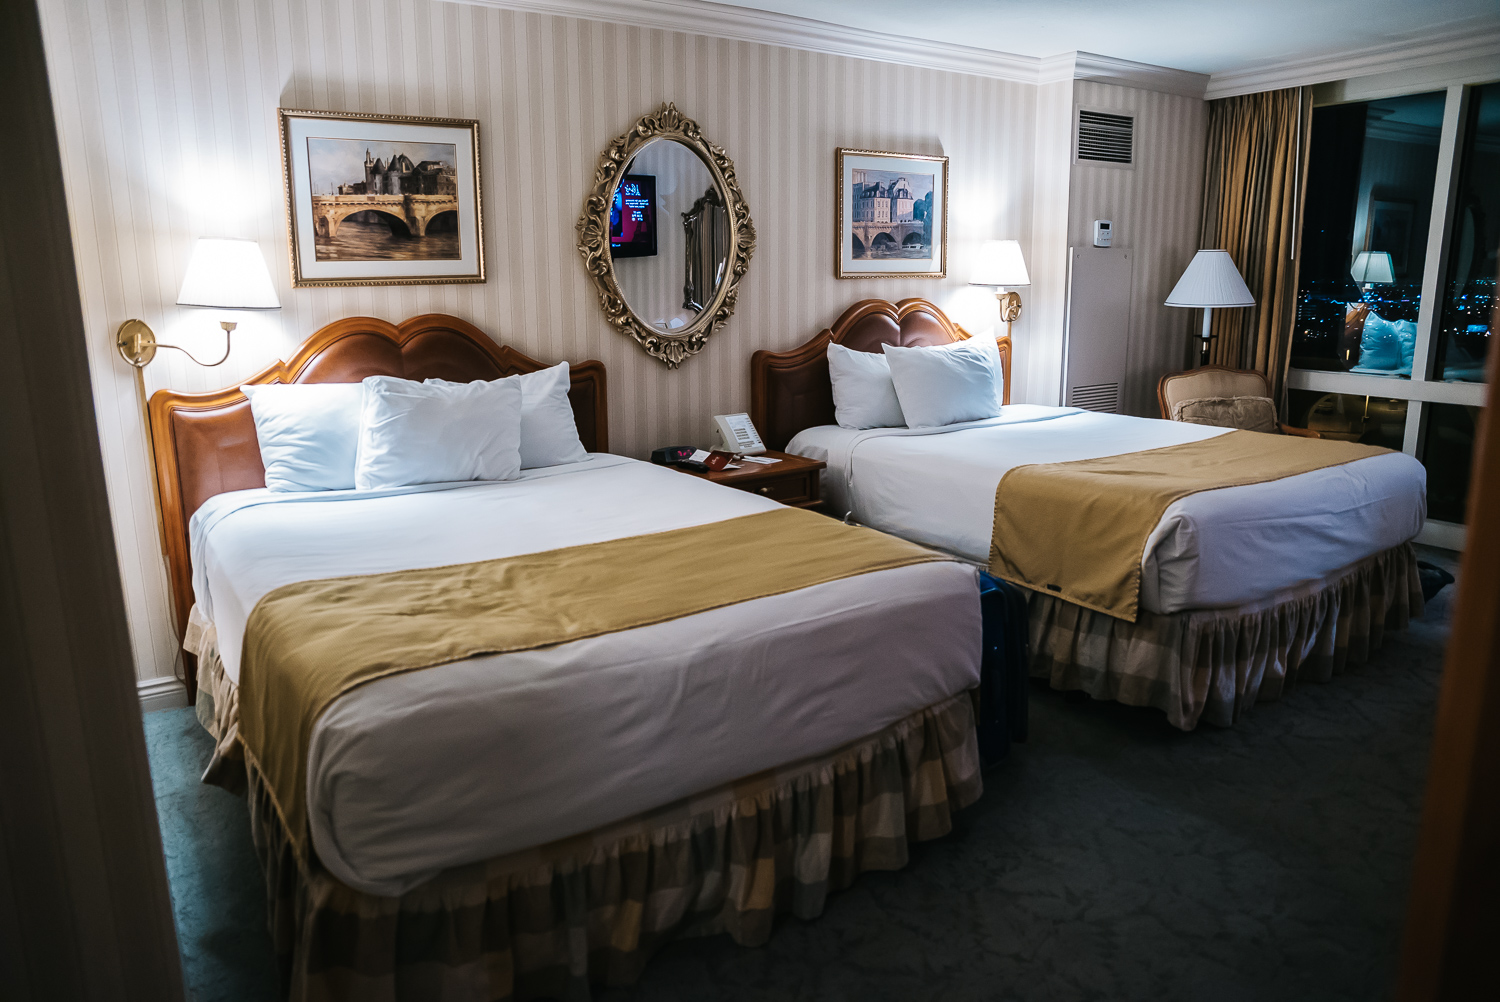 Paris Las Vegas Hotel Room - Las Vegas Paris Hotel Reservation